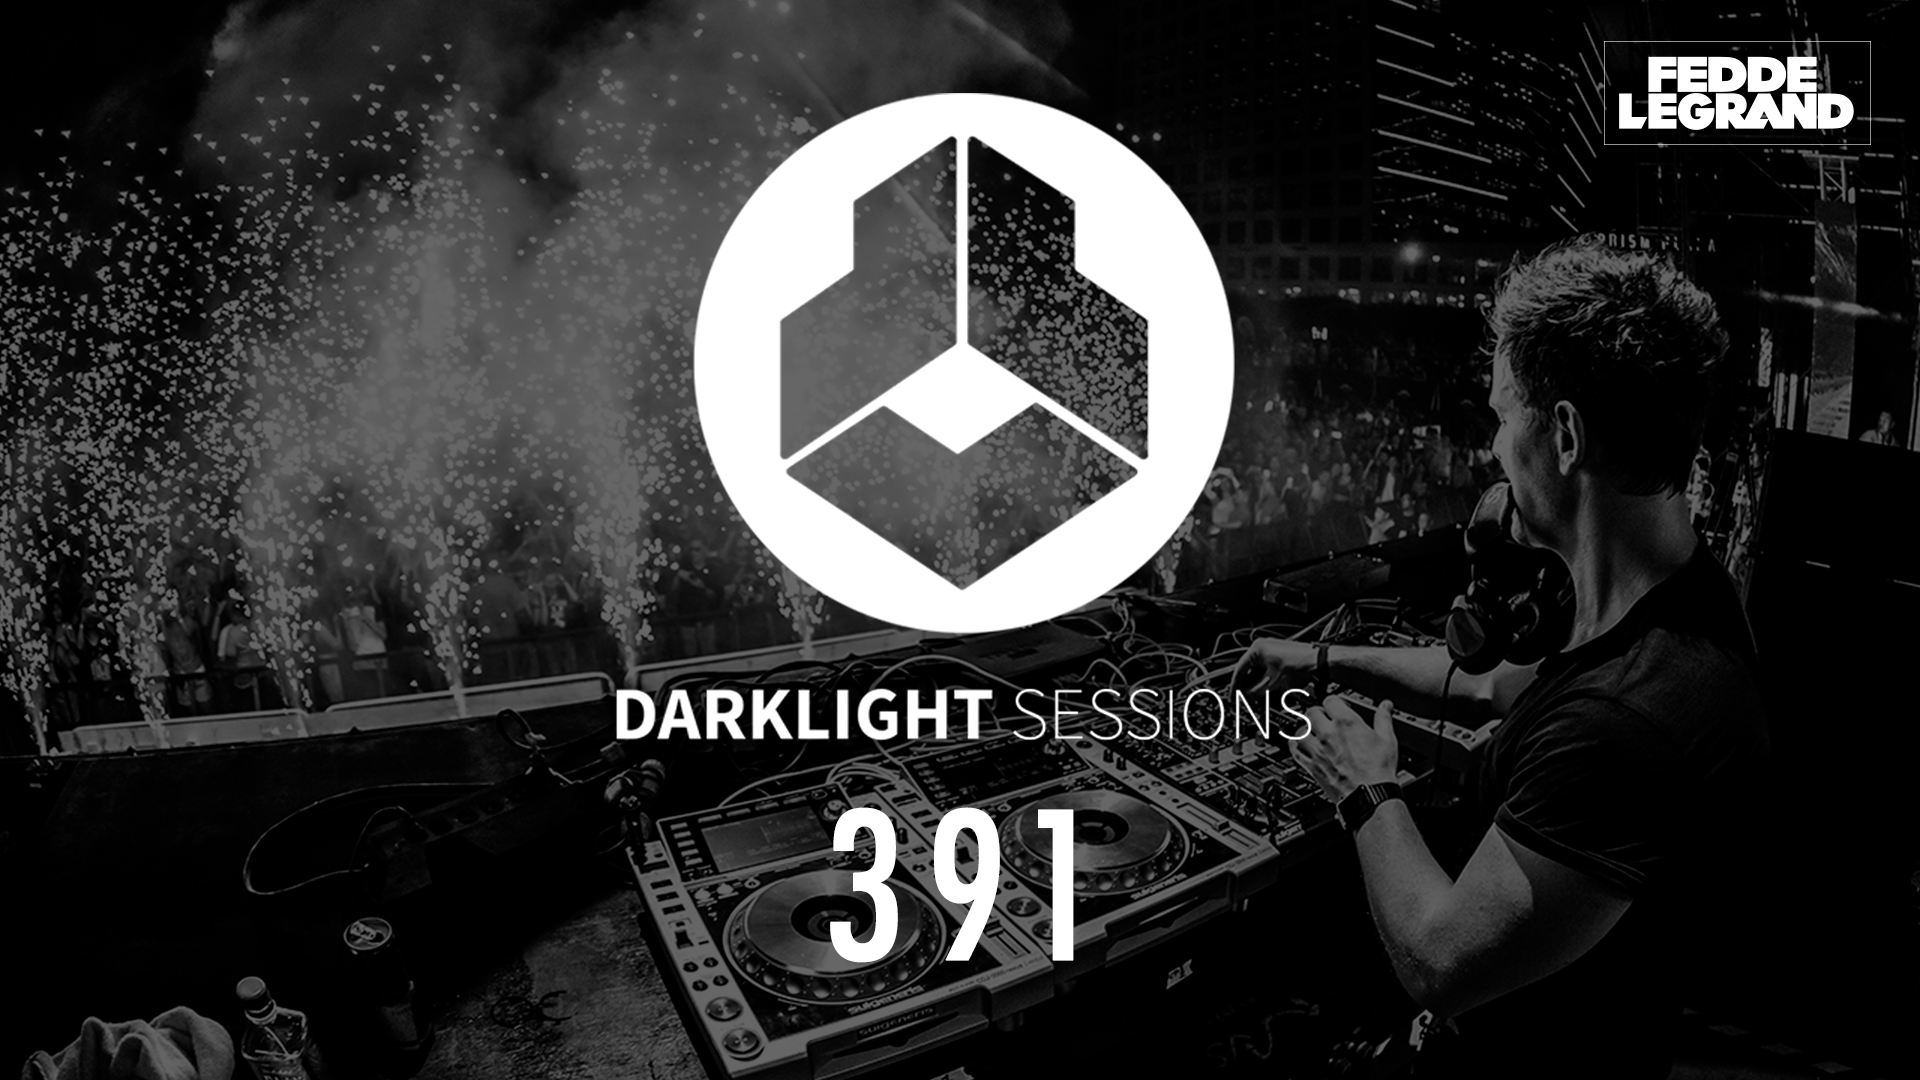 Darklight Sessions 391